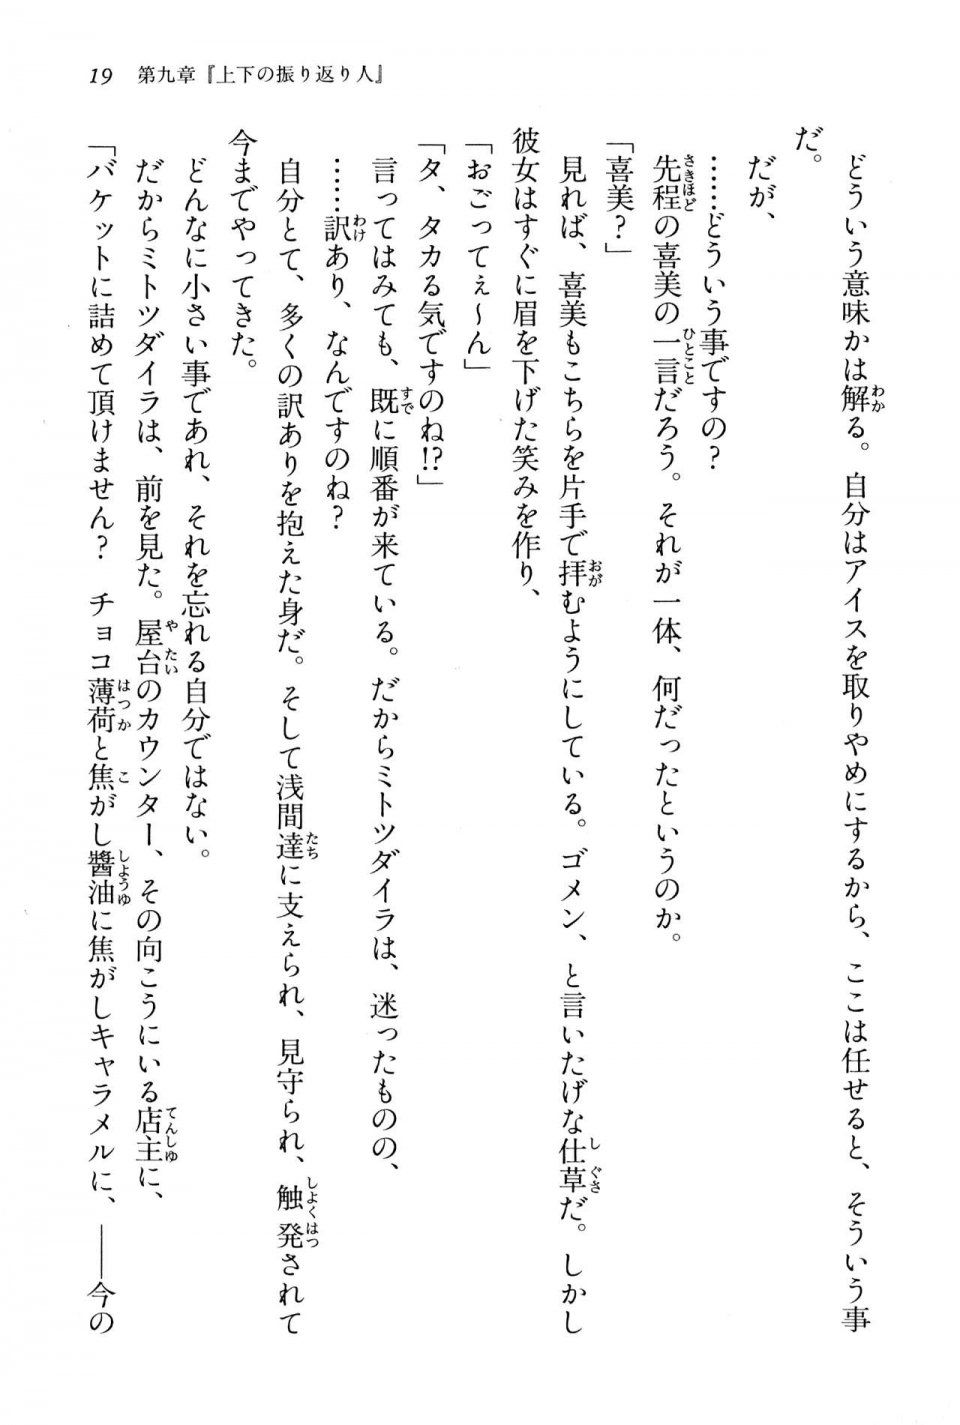 Kyoukai Senjou no Horizon BD Special Mininovel Vol 3(2A) - Photo #23